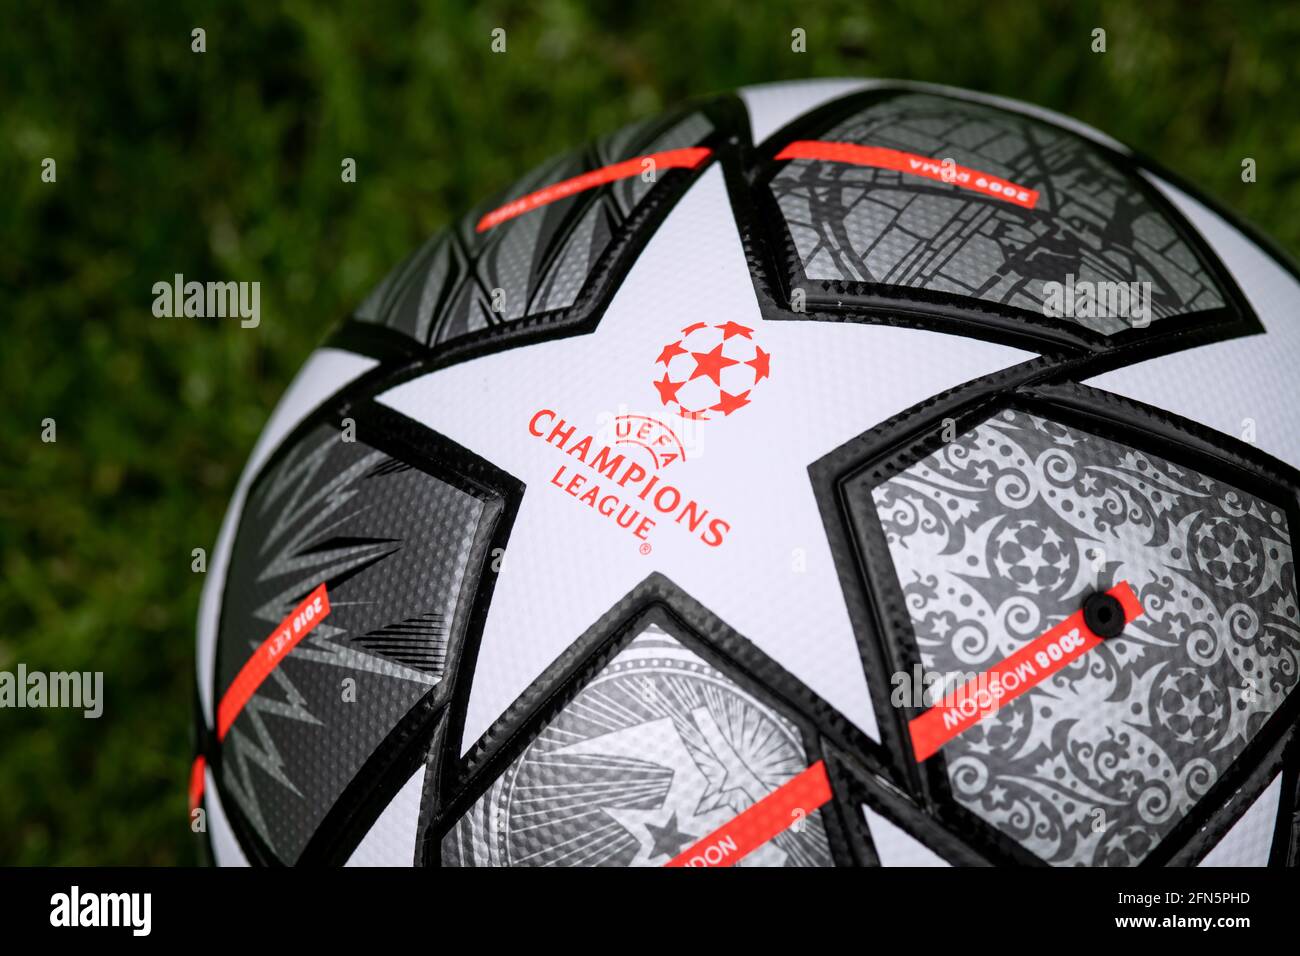 Adidas Champions League Ball Uefa Stockfotos und -bilder Kaufen - Alamy